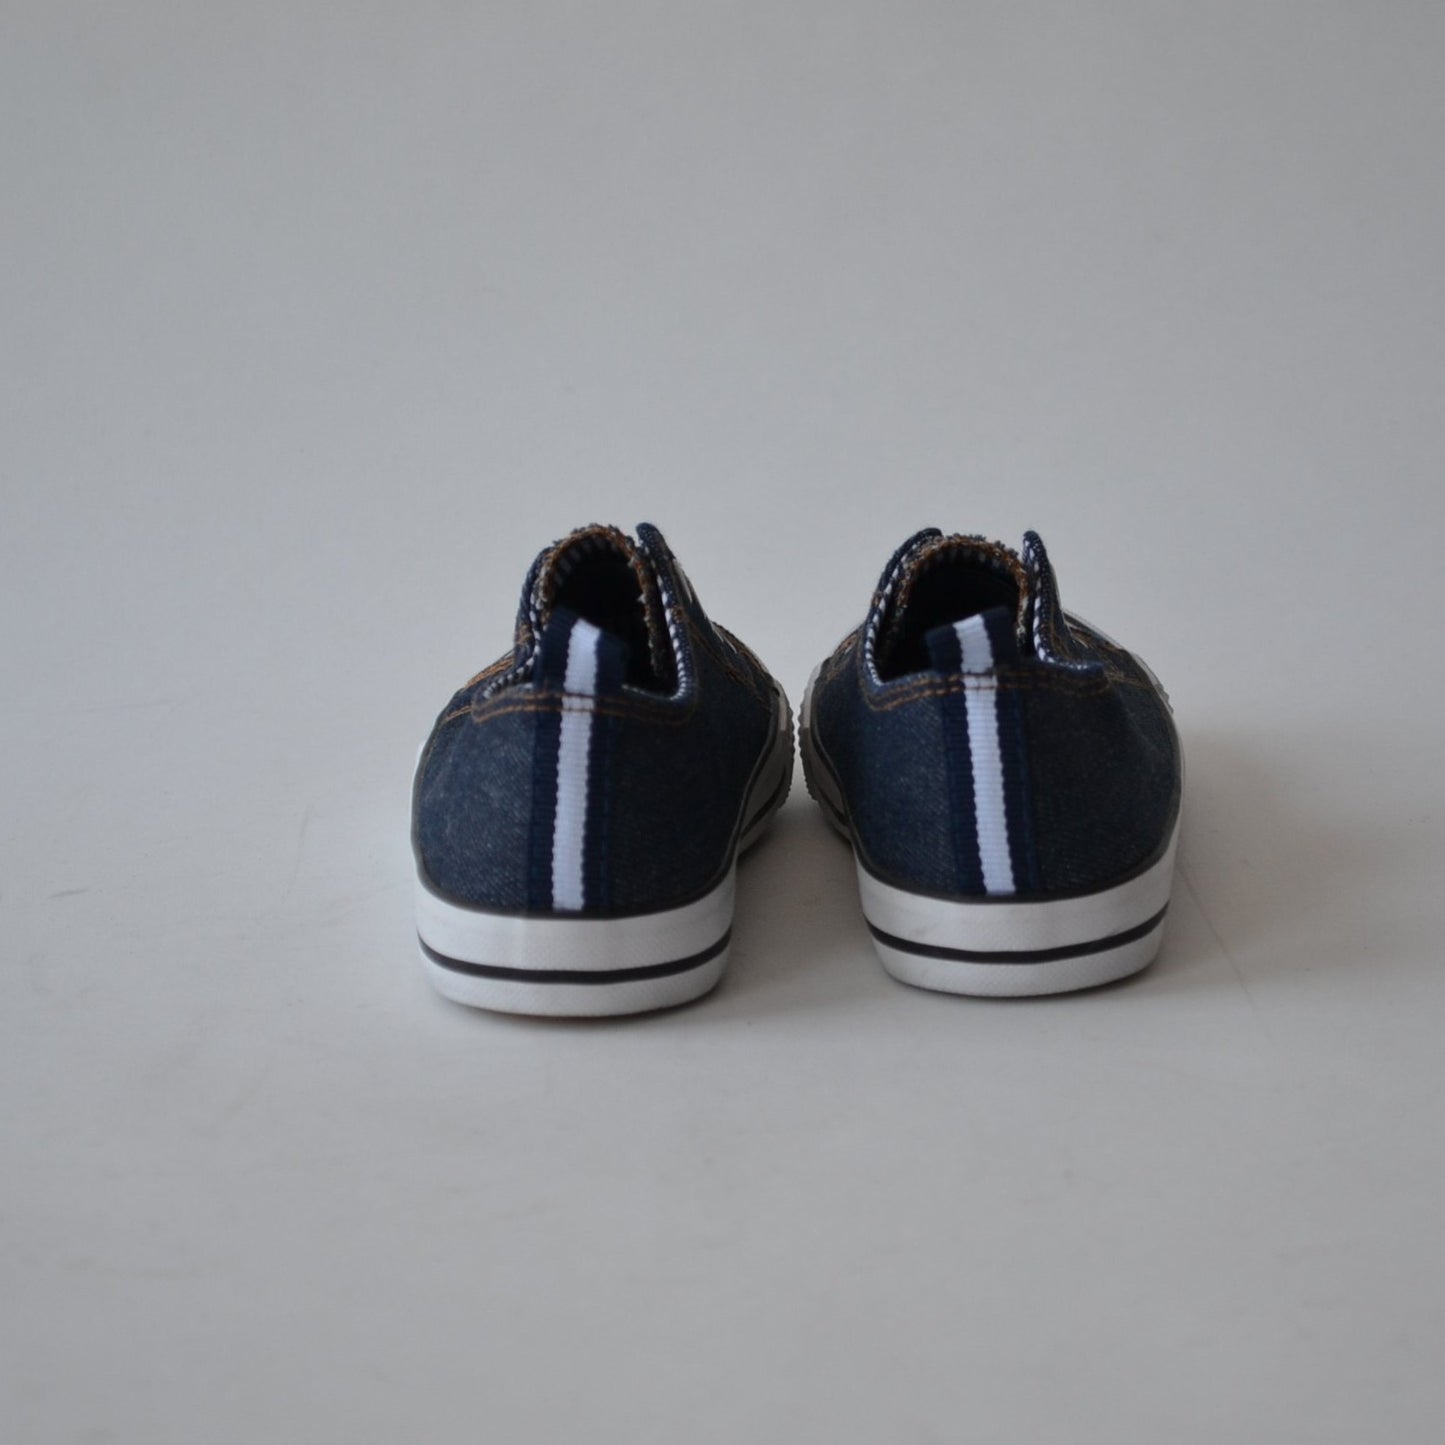 Lily & Dan Denim Style Trainers Shoe Size 11 (jr)